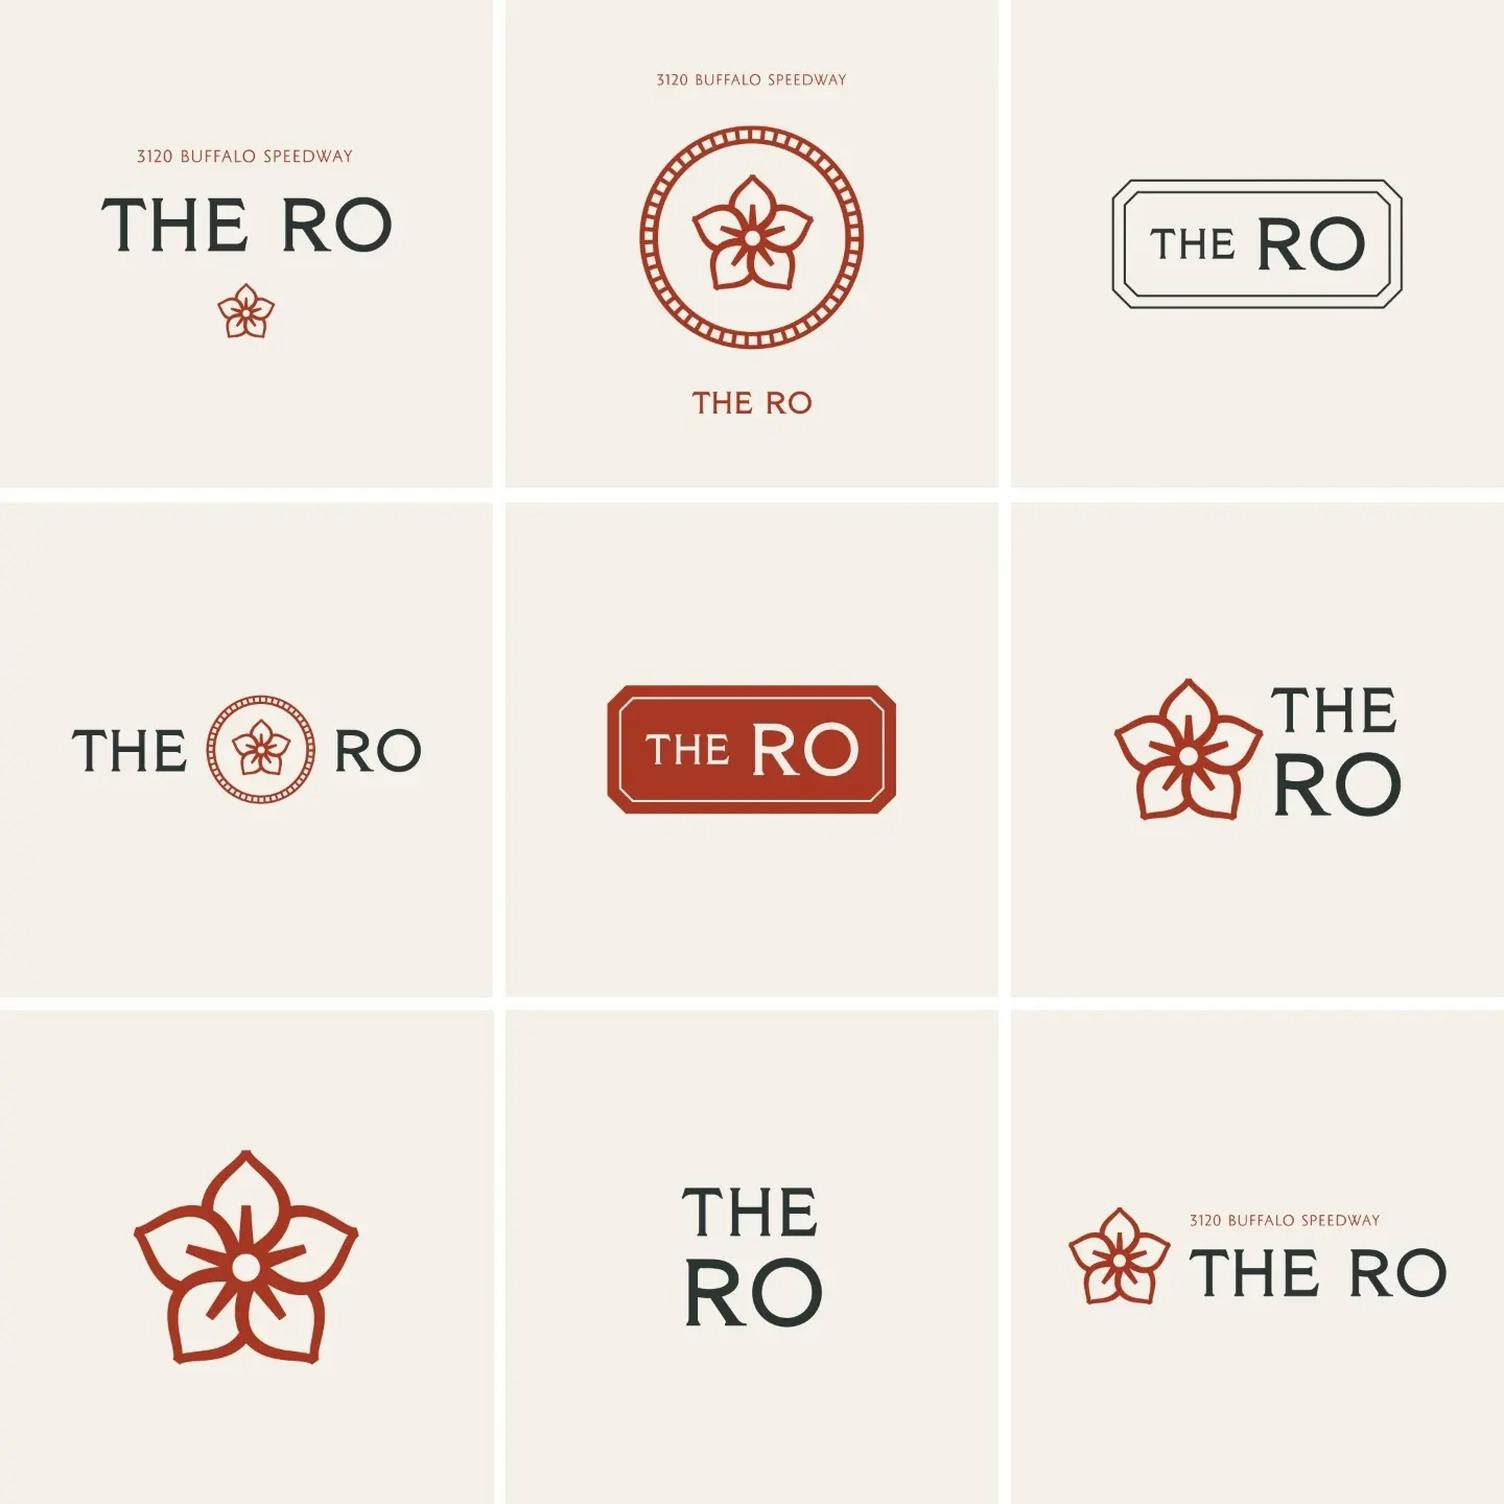 The Ro logos